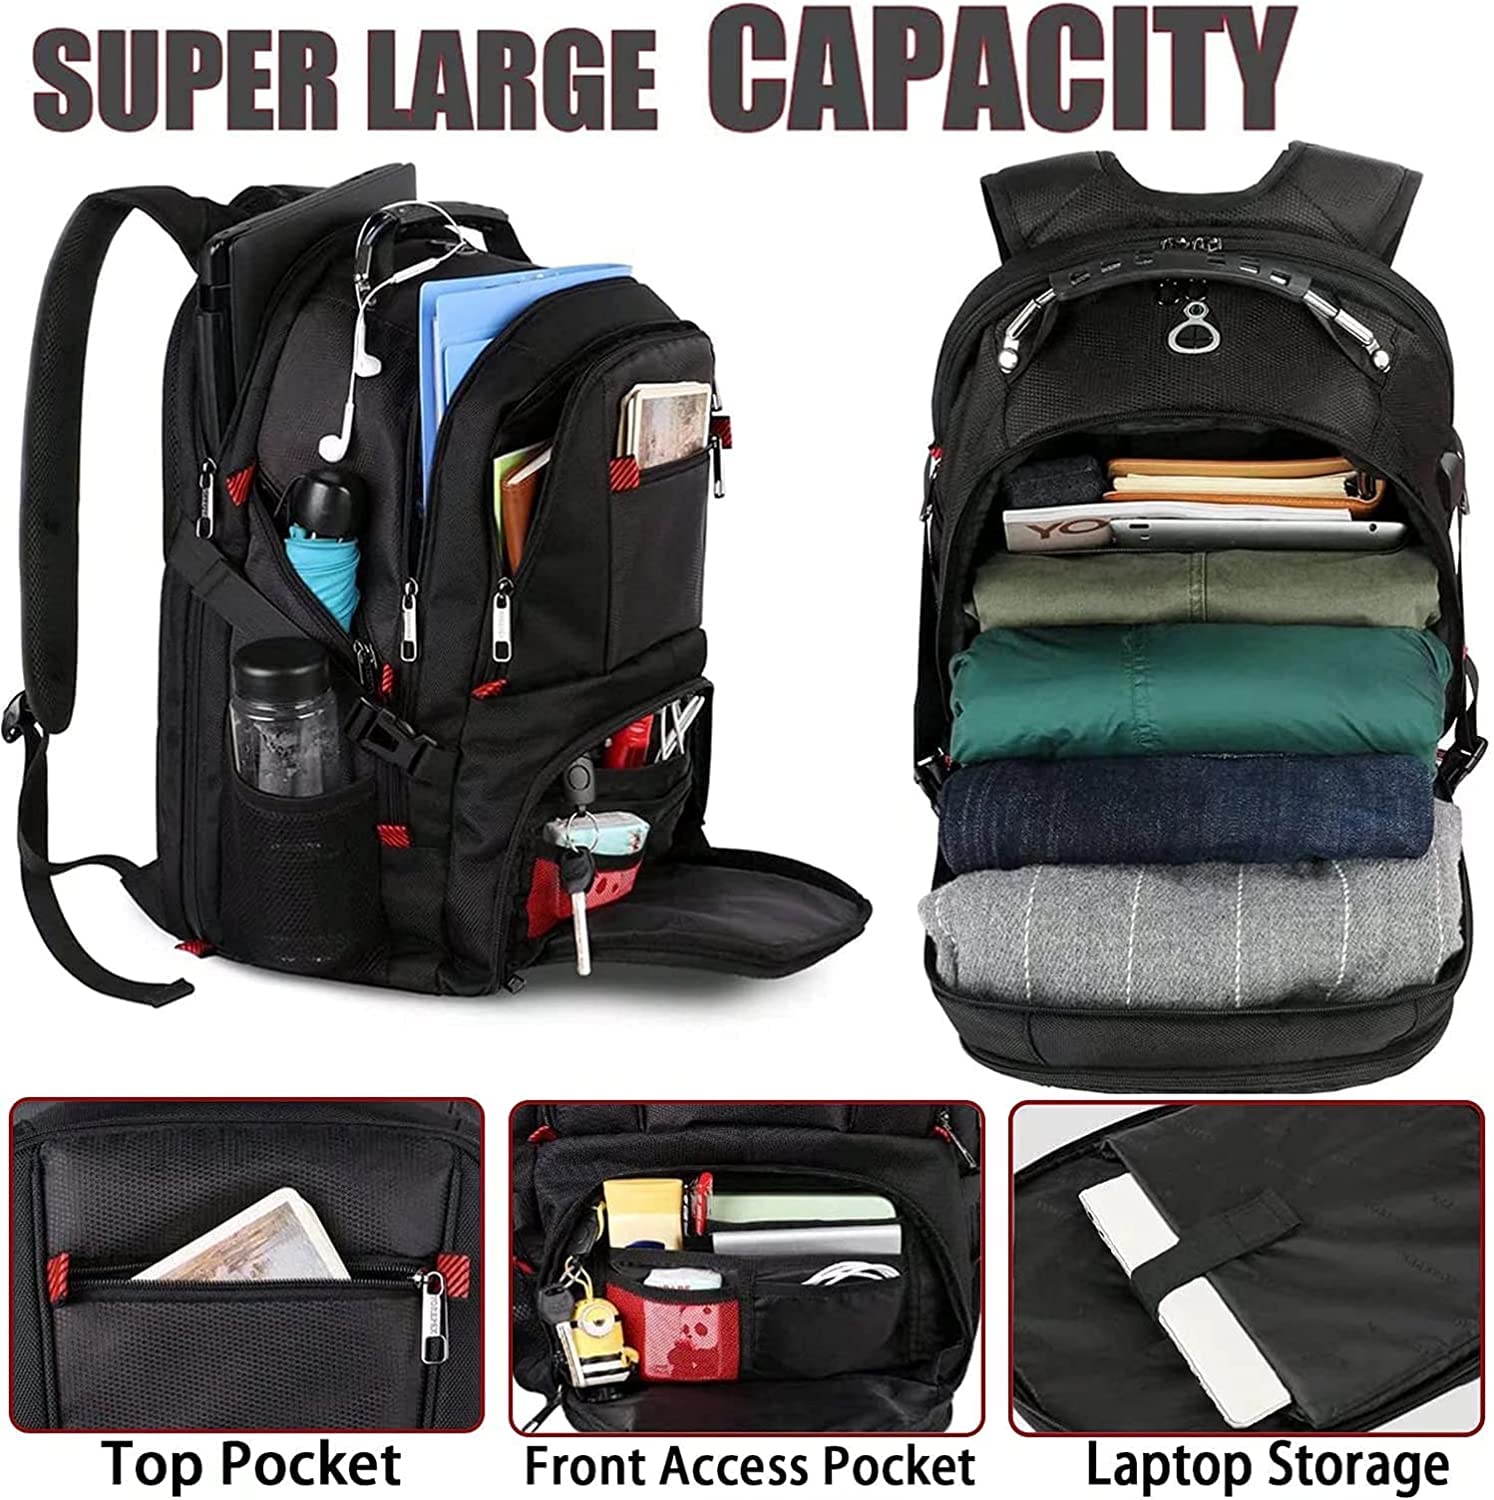 YOREPEK Travel Backpack, 50L Extra Large Laptop Backpacks for Men Women, Soccer Bag, Soccer Backpack with Ball Compartment